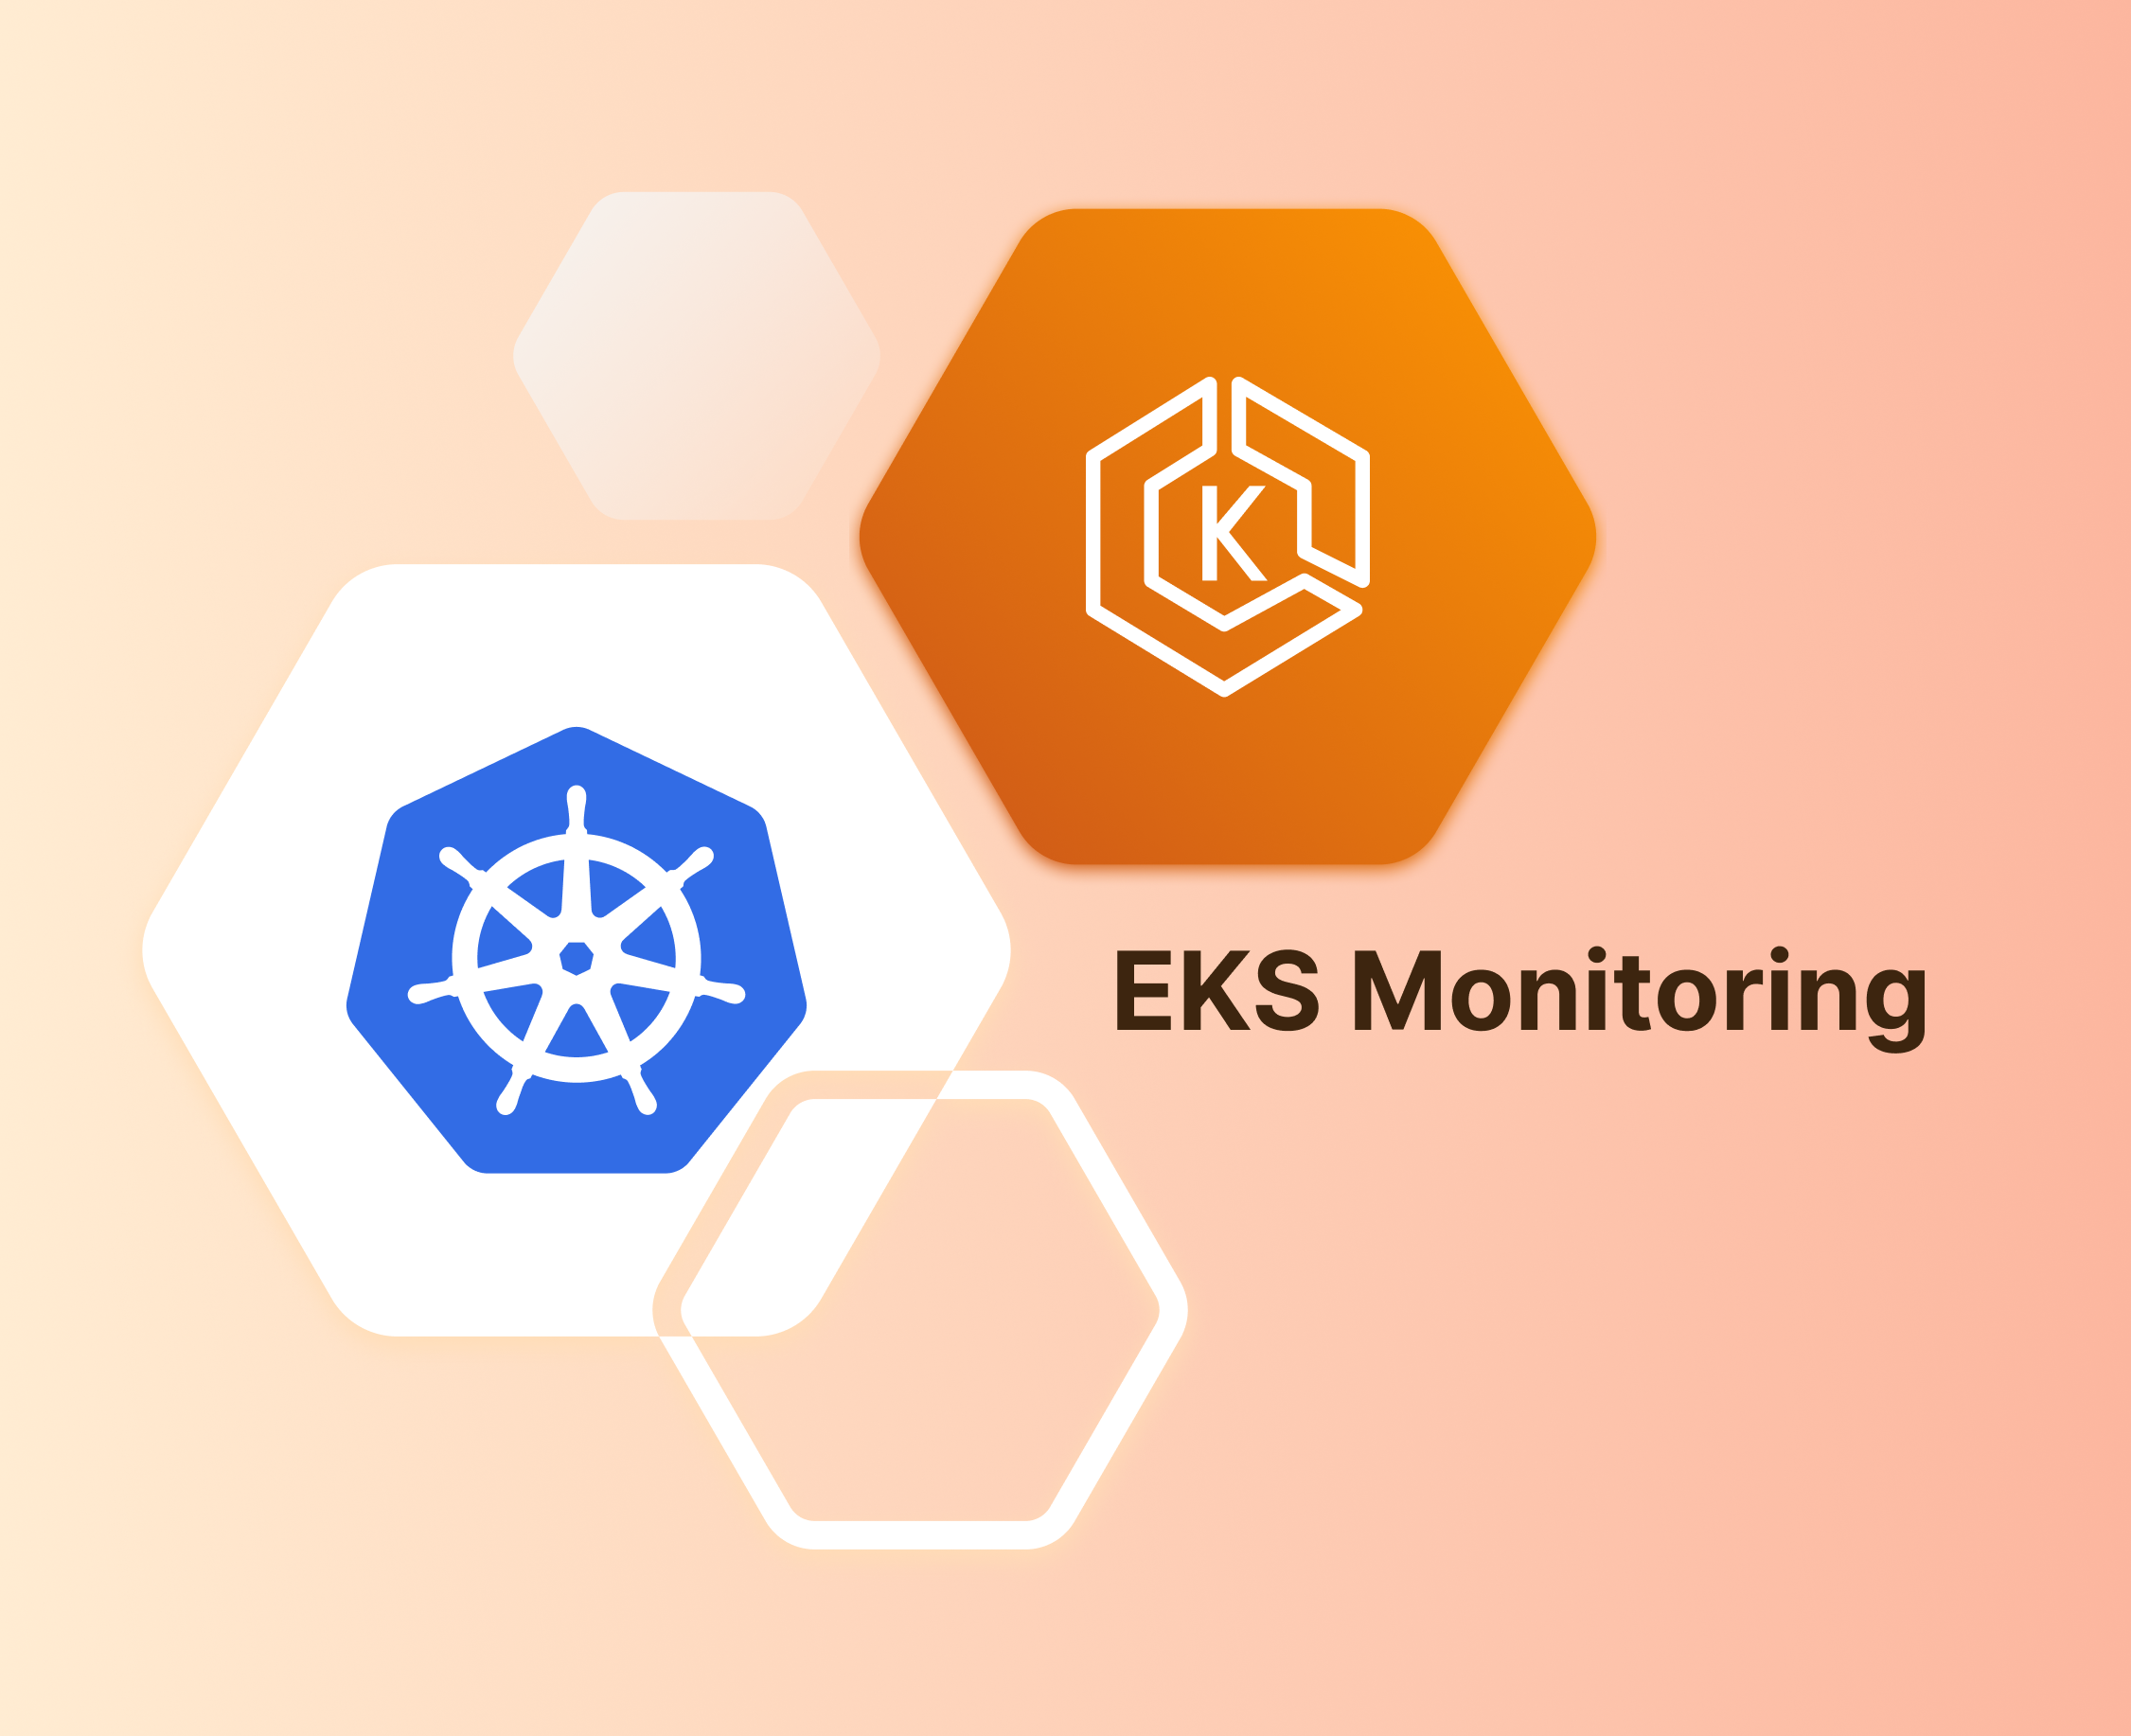 EKS monitoring best practices & tools